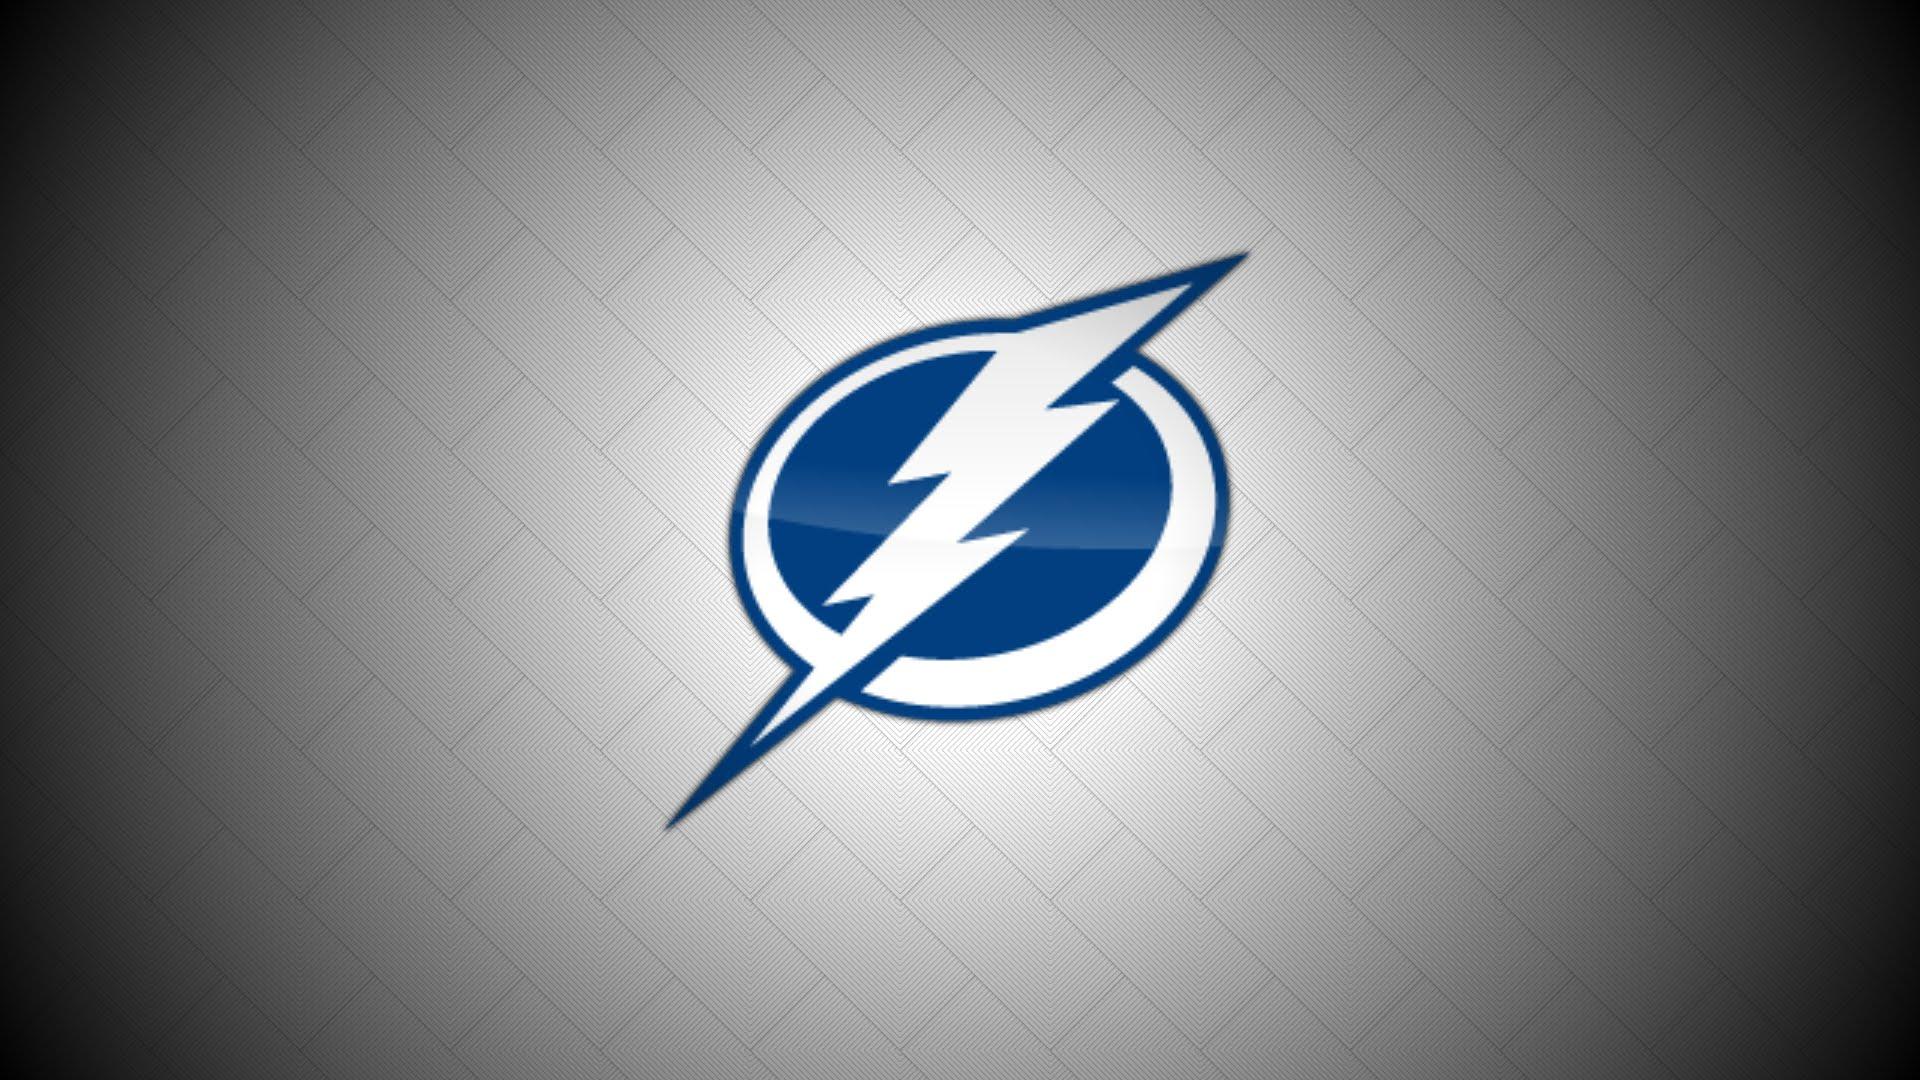 Tampa Bay Lightning Wallpaper 2015 HD Picture